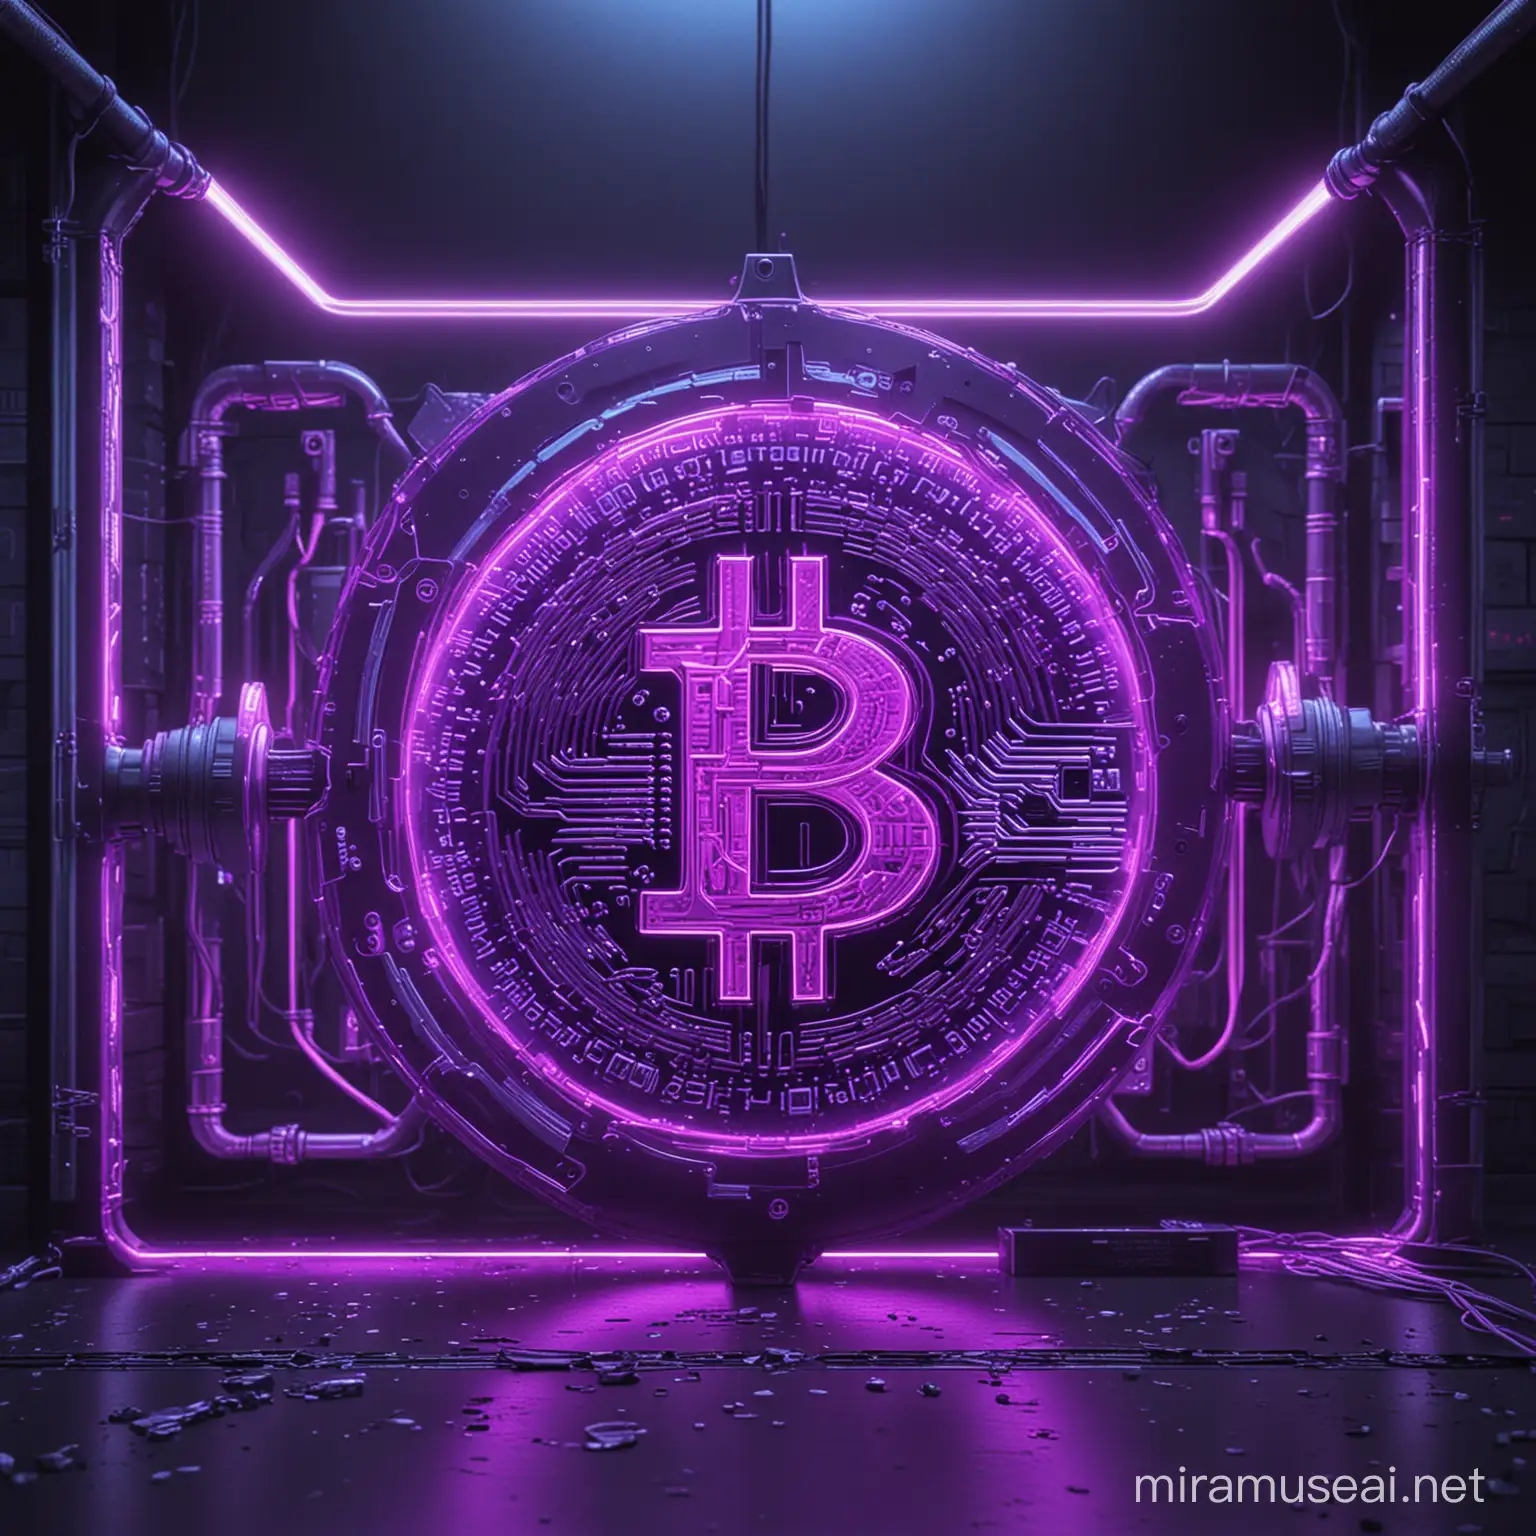 Futuristic Cyberpunk Bitcoin Concept with Violet Neon Lights